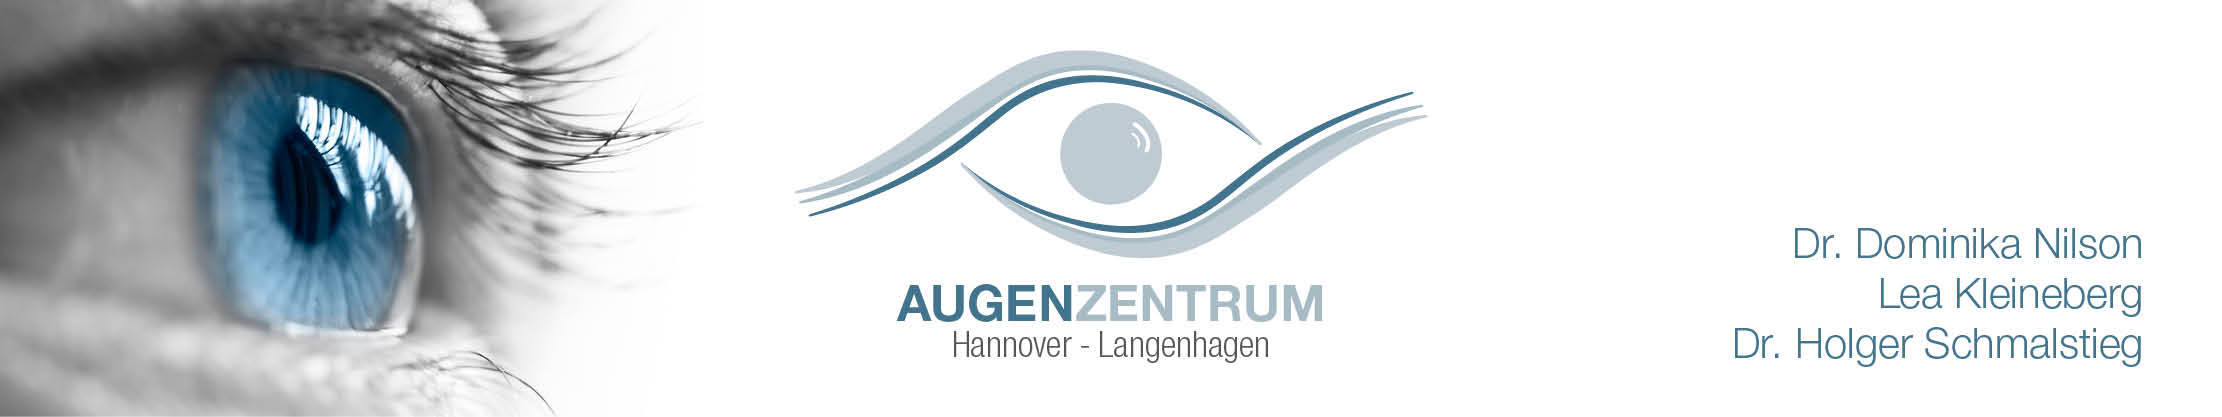 (c) Augenzentrum-hannover-langenhagen.de